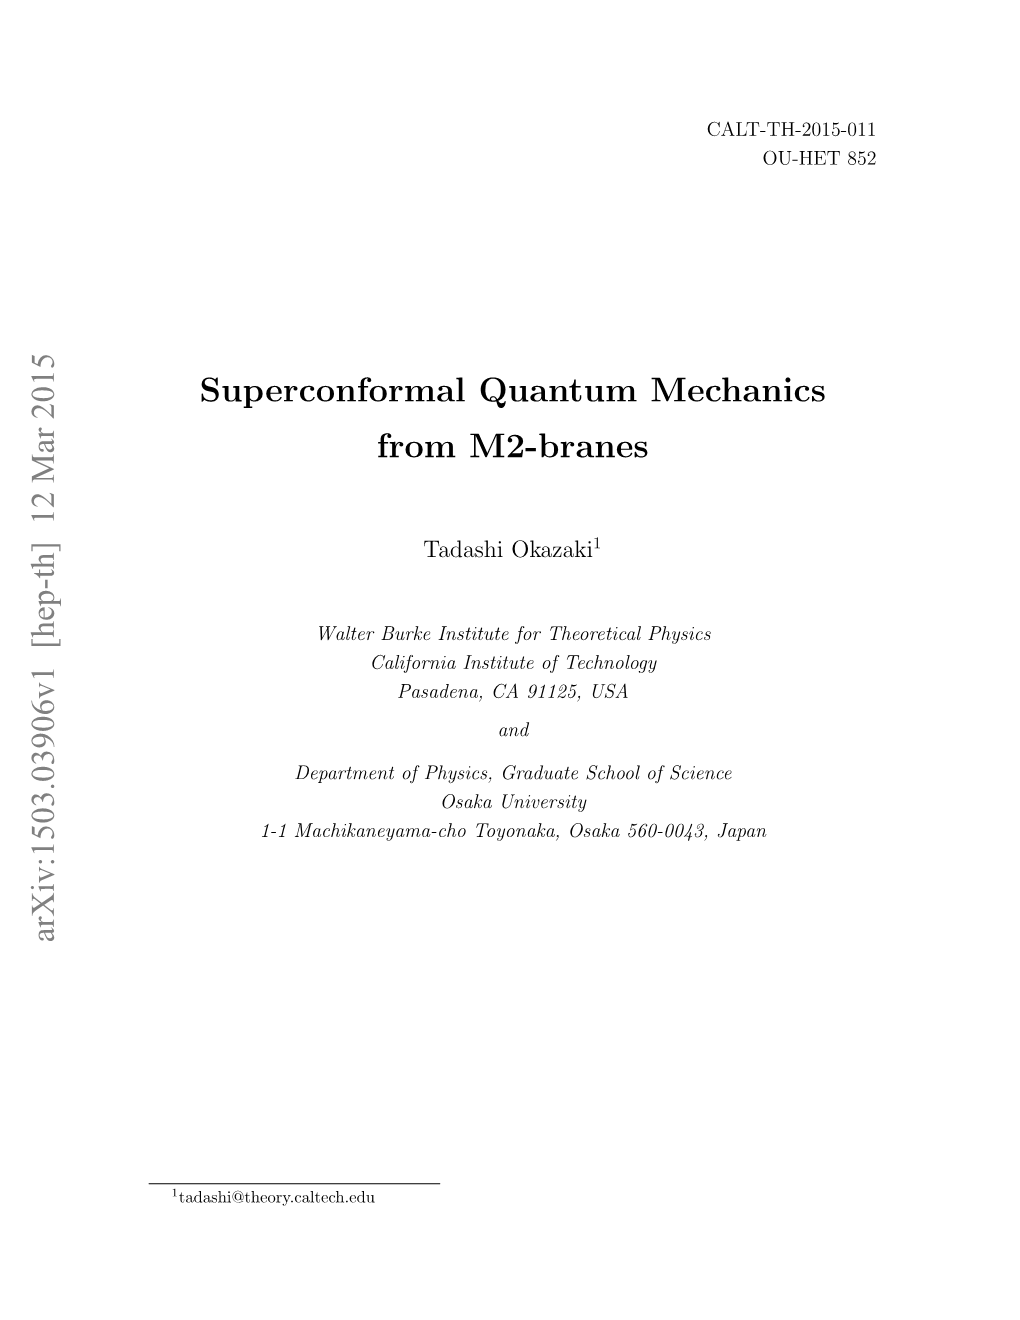 Superconformal Quantum Mechanics from M2-Branes Arxiv:1503.03906